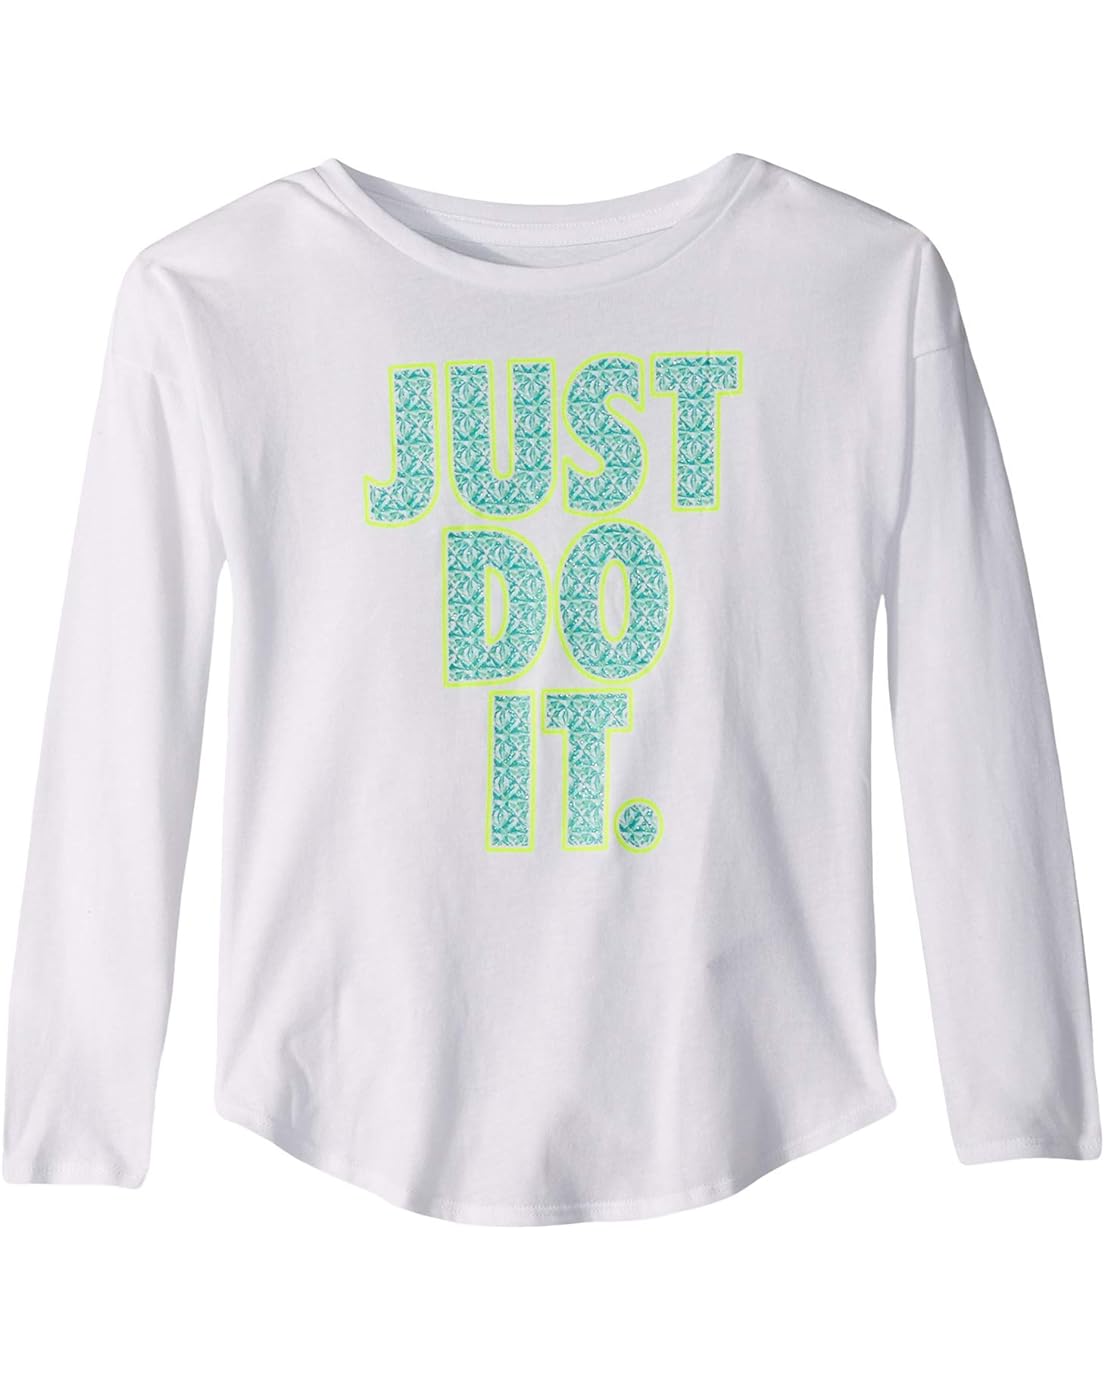 Nike Kids Long Sleeve Just Do It Graphic T-Shirt (Little Kids)